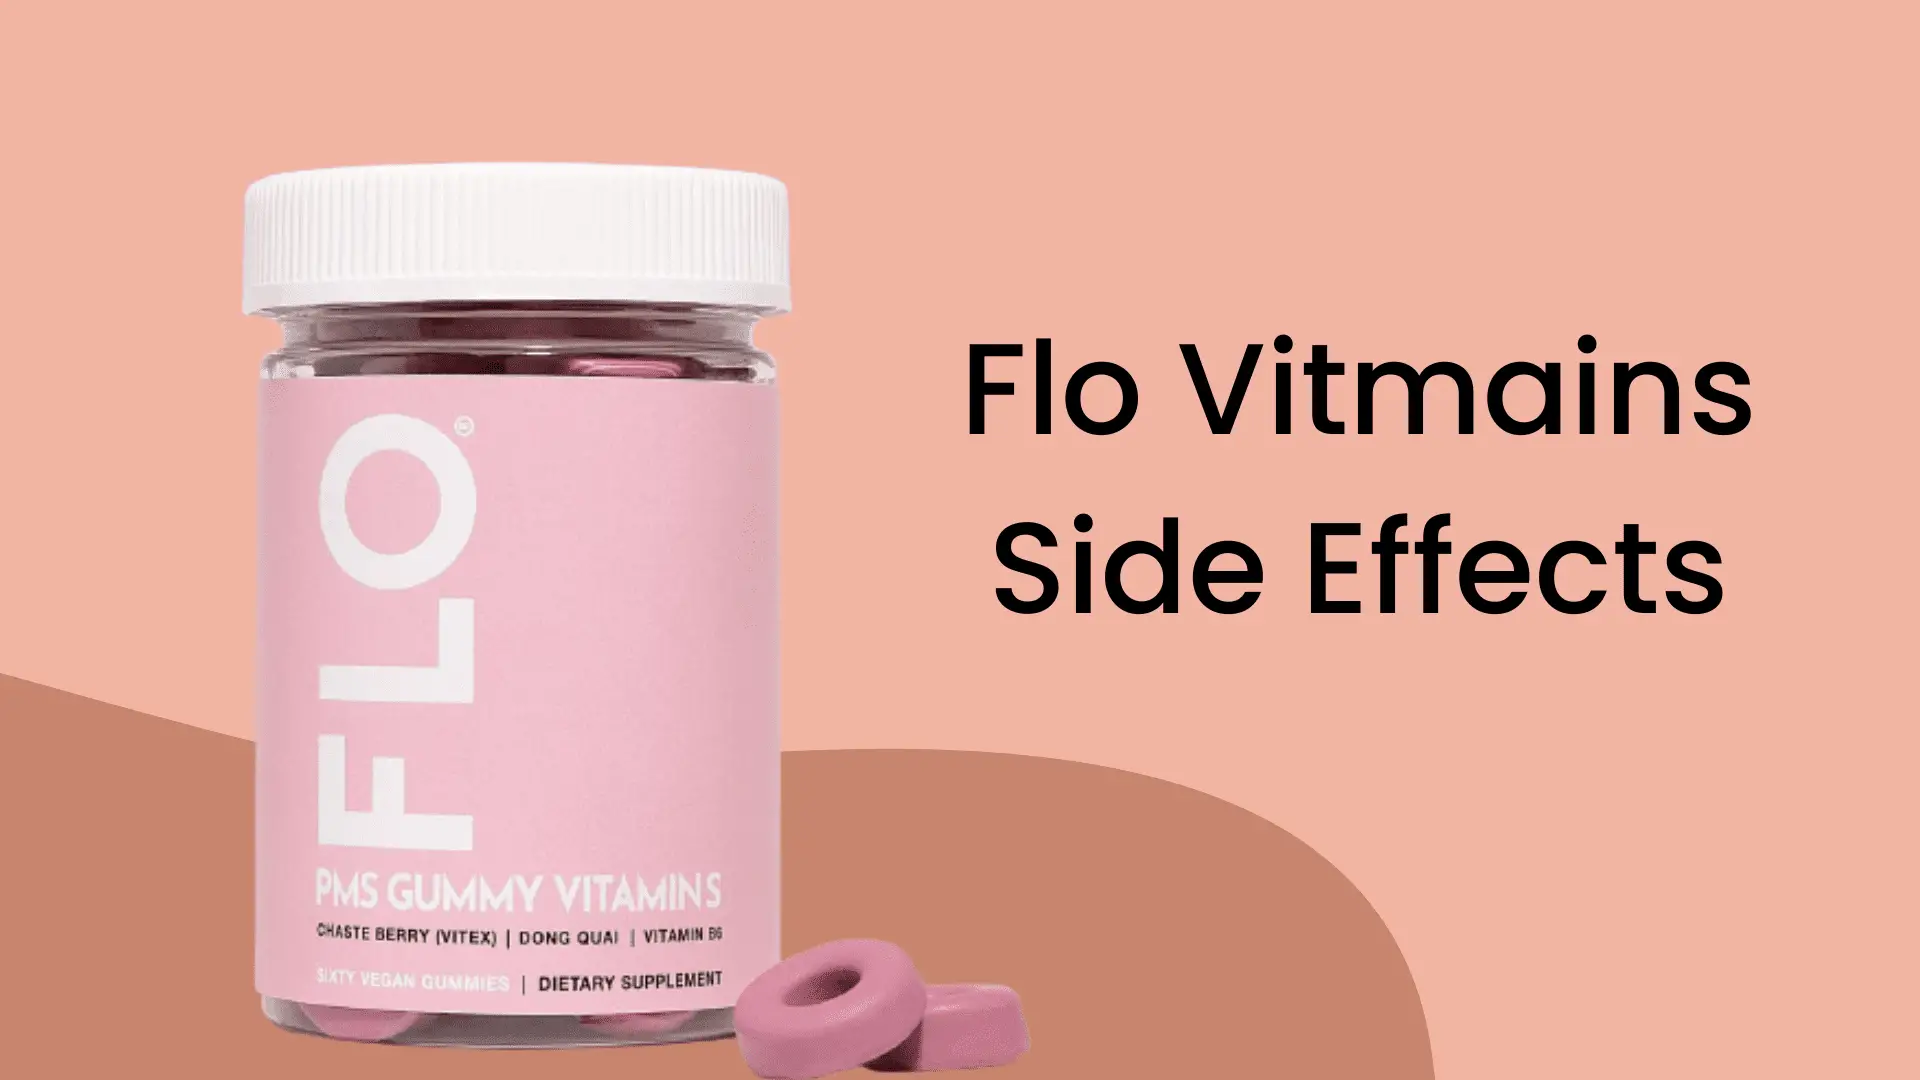 Flo Vitamins Supplement in left